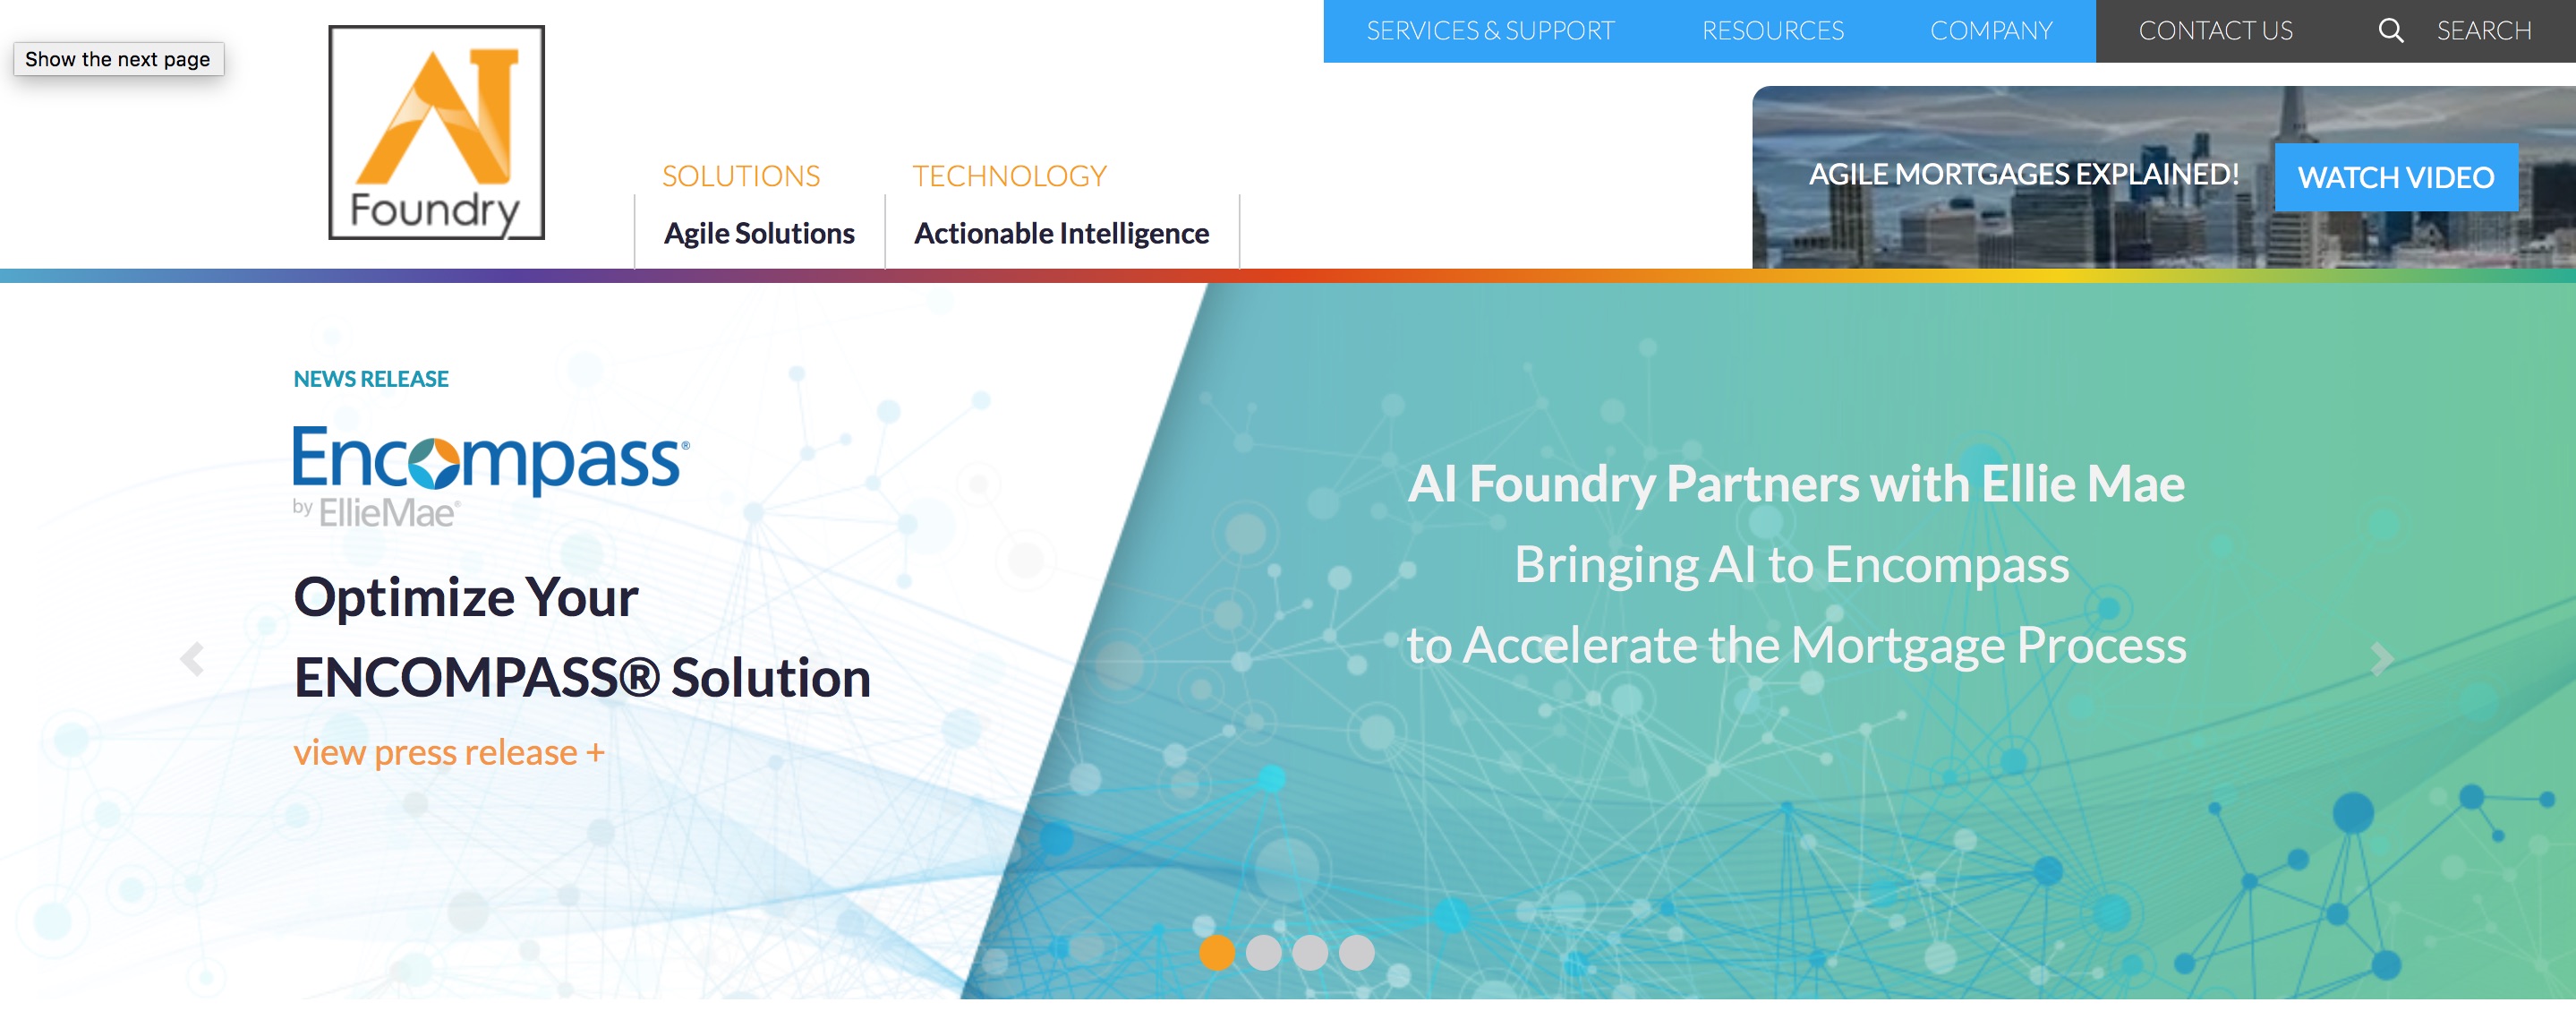 AI Foundry and Ellie Mae Leverage AI to Accelerate Lending